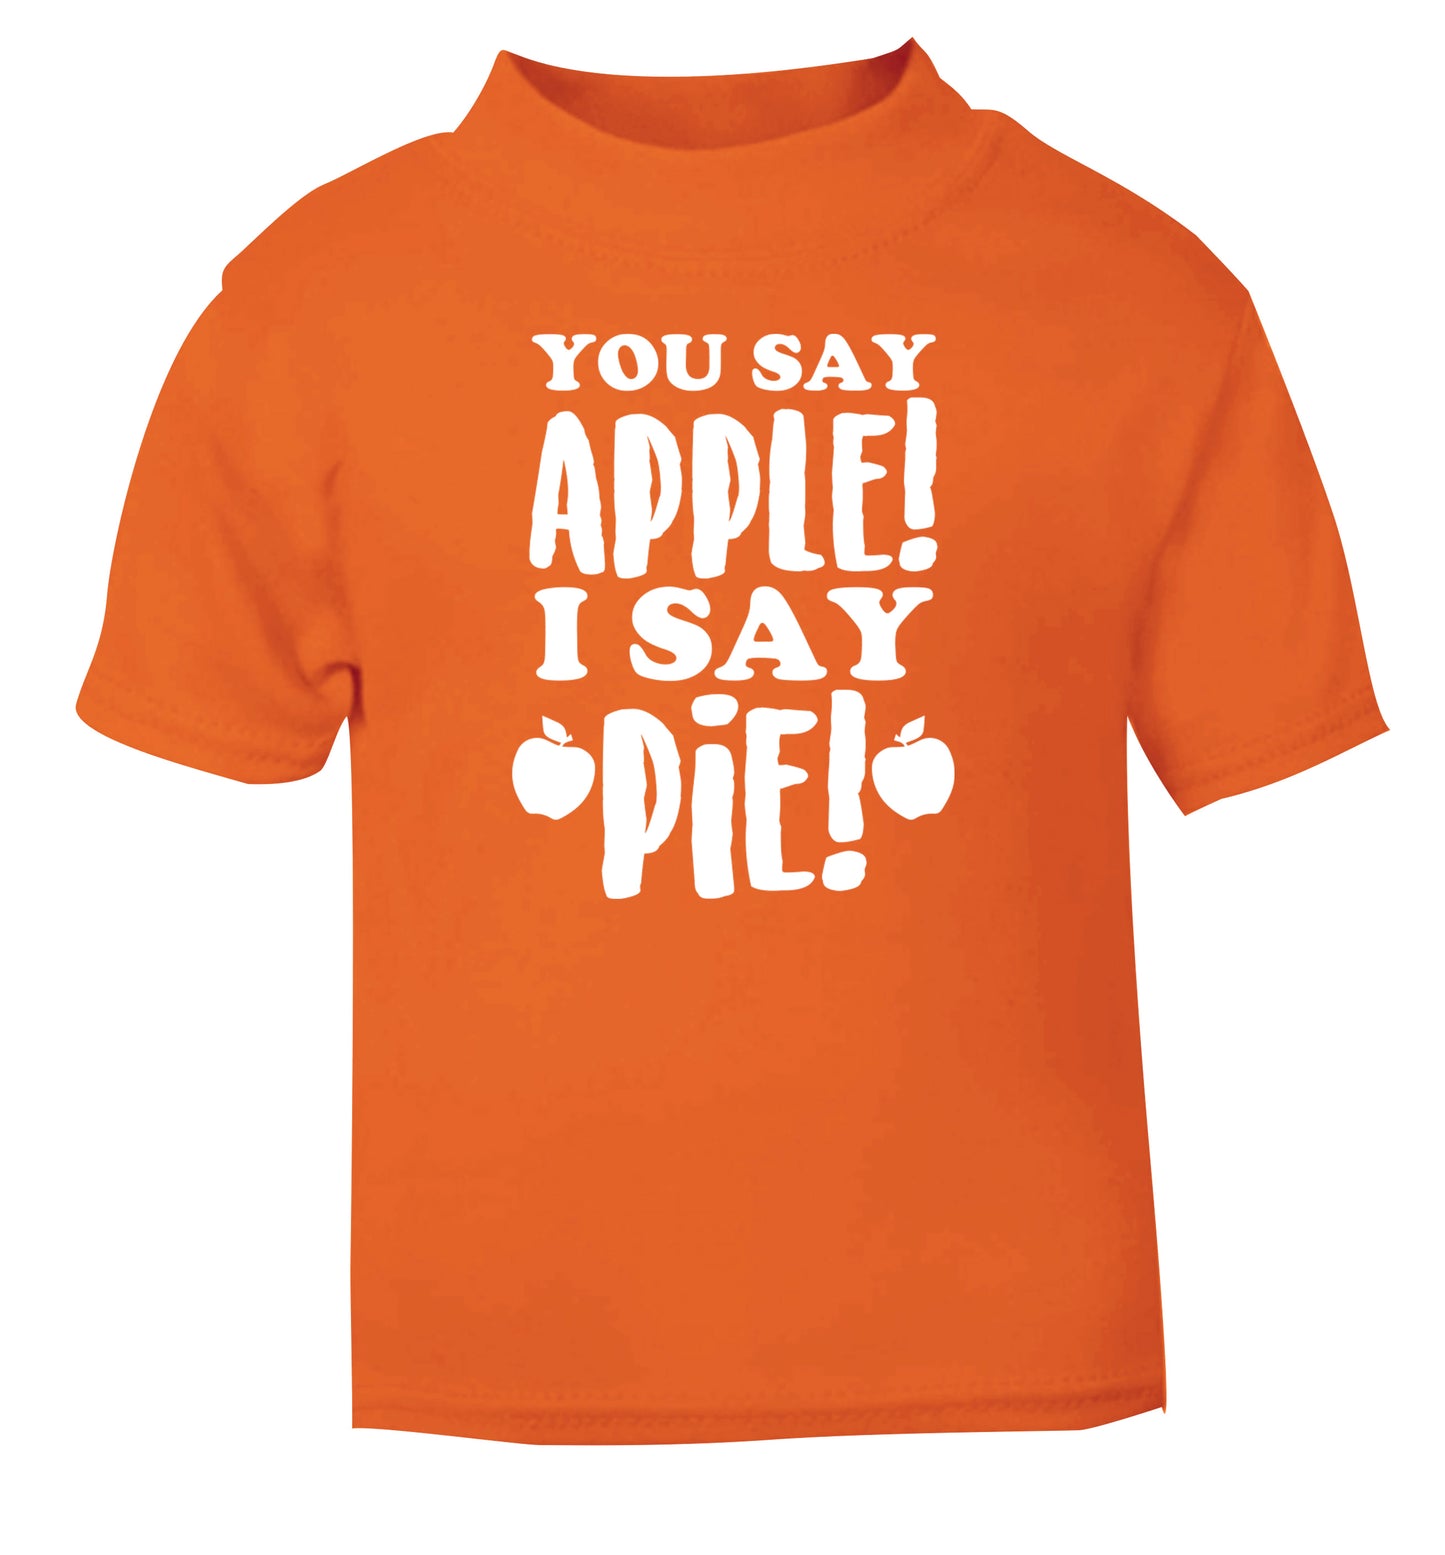 You say apple I say pie! orange Baby Toddler Tshirt 2 Years